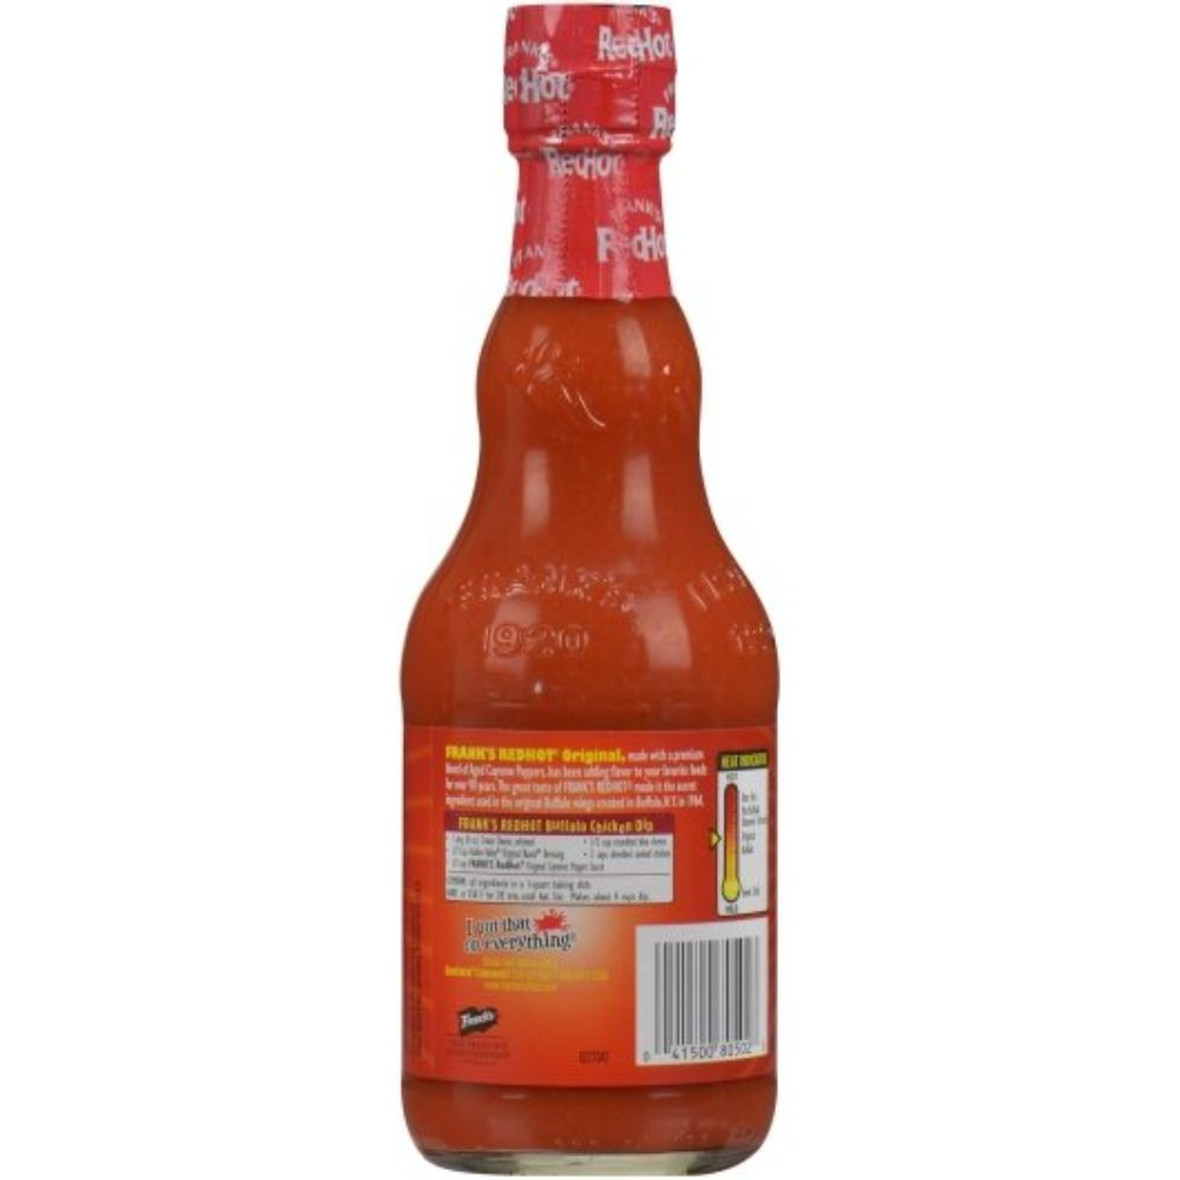 Frank's Redhot Original Cayenne Pepper Hot Sauce Bottle